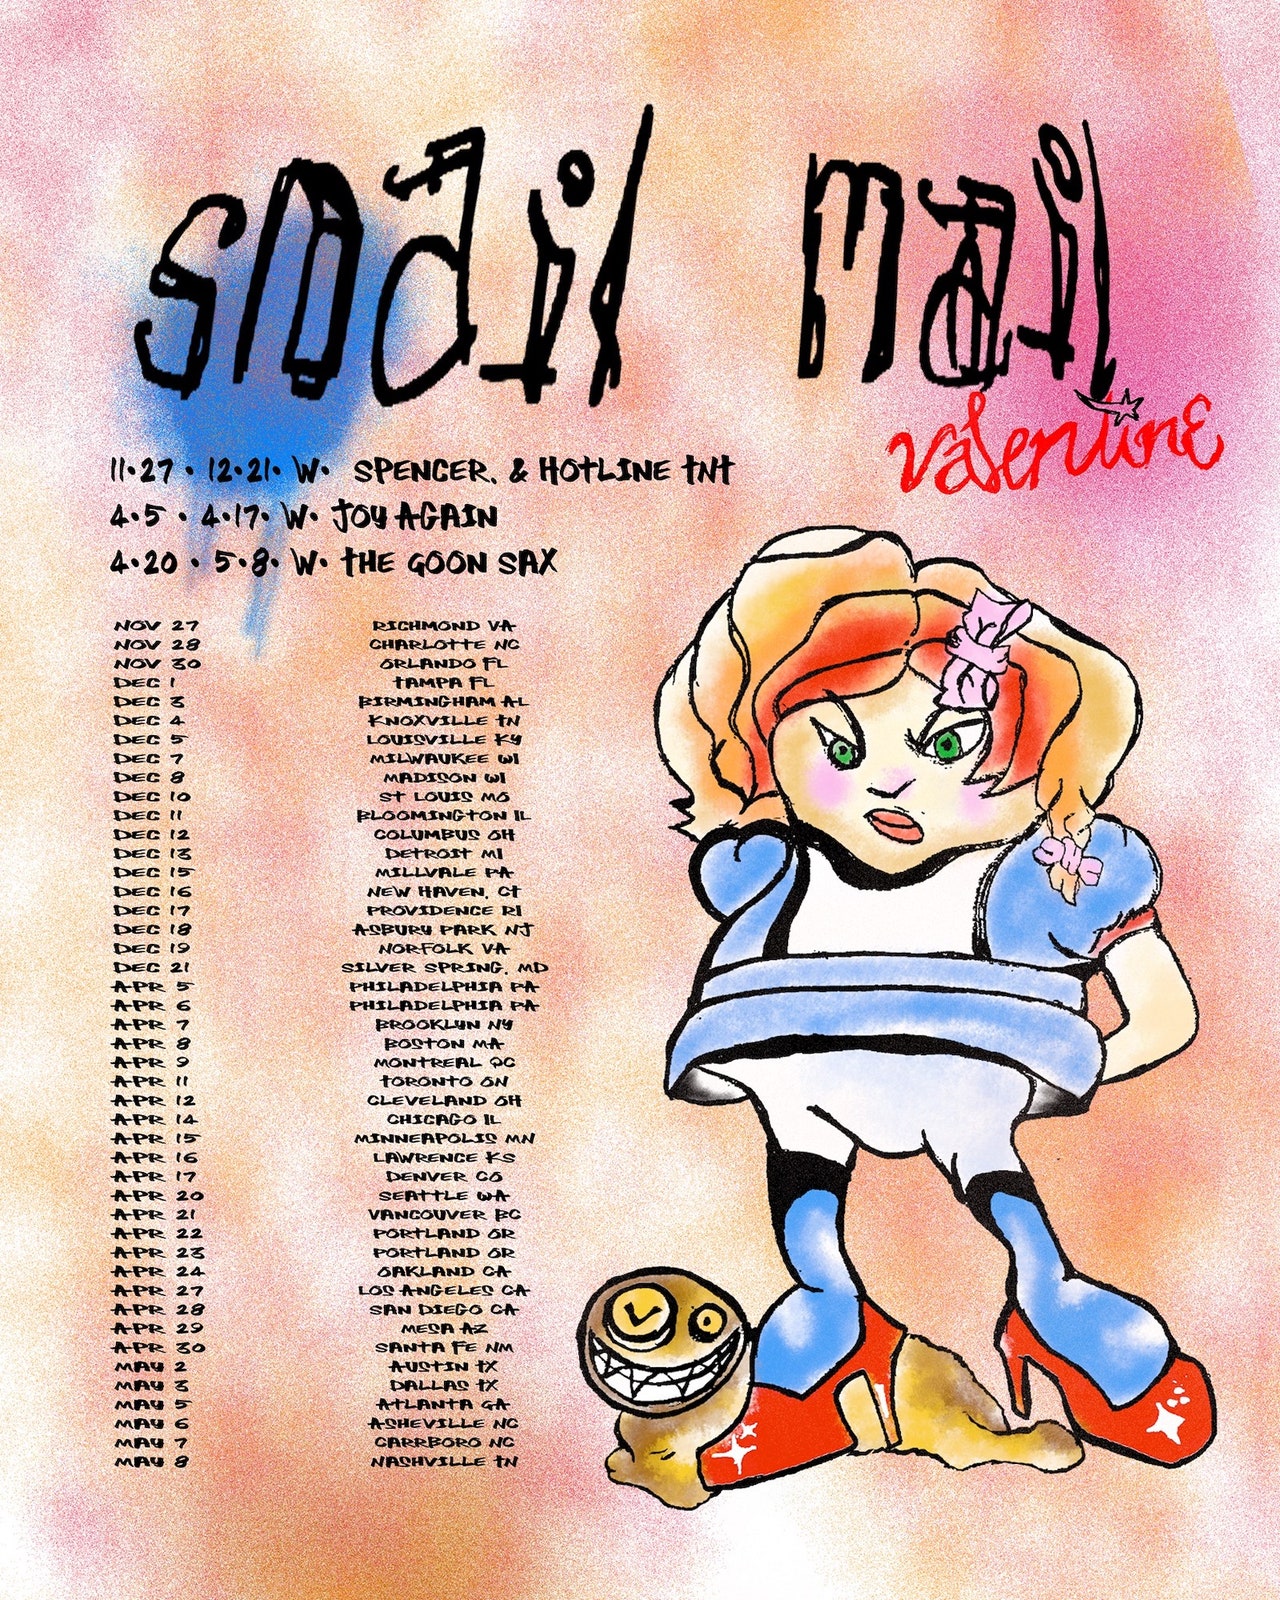 Snail Mail: Valentine Tour